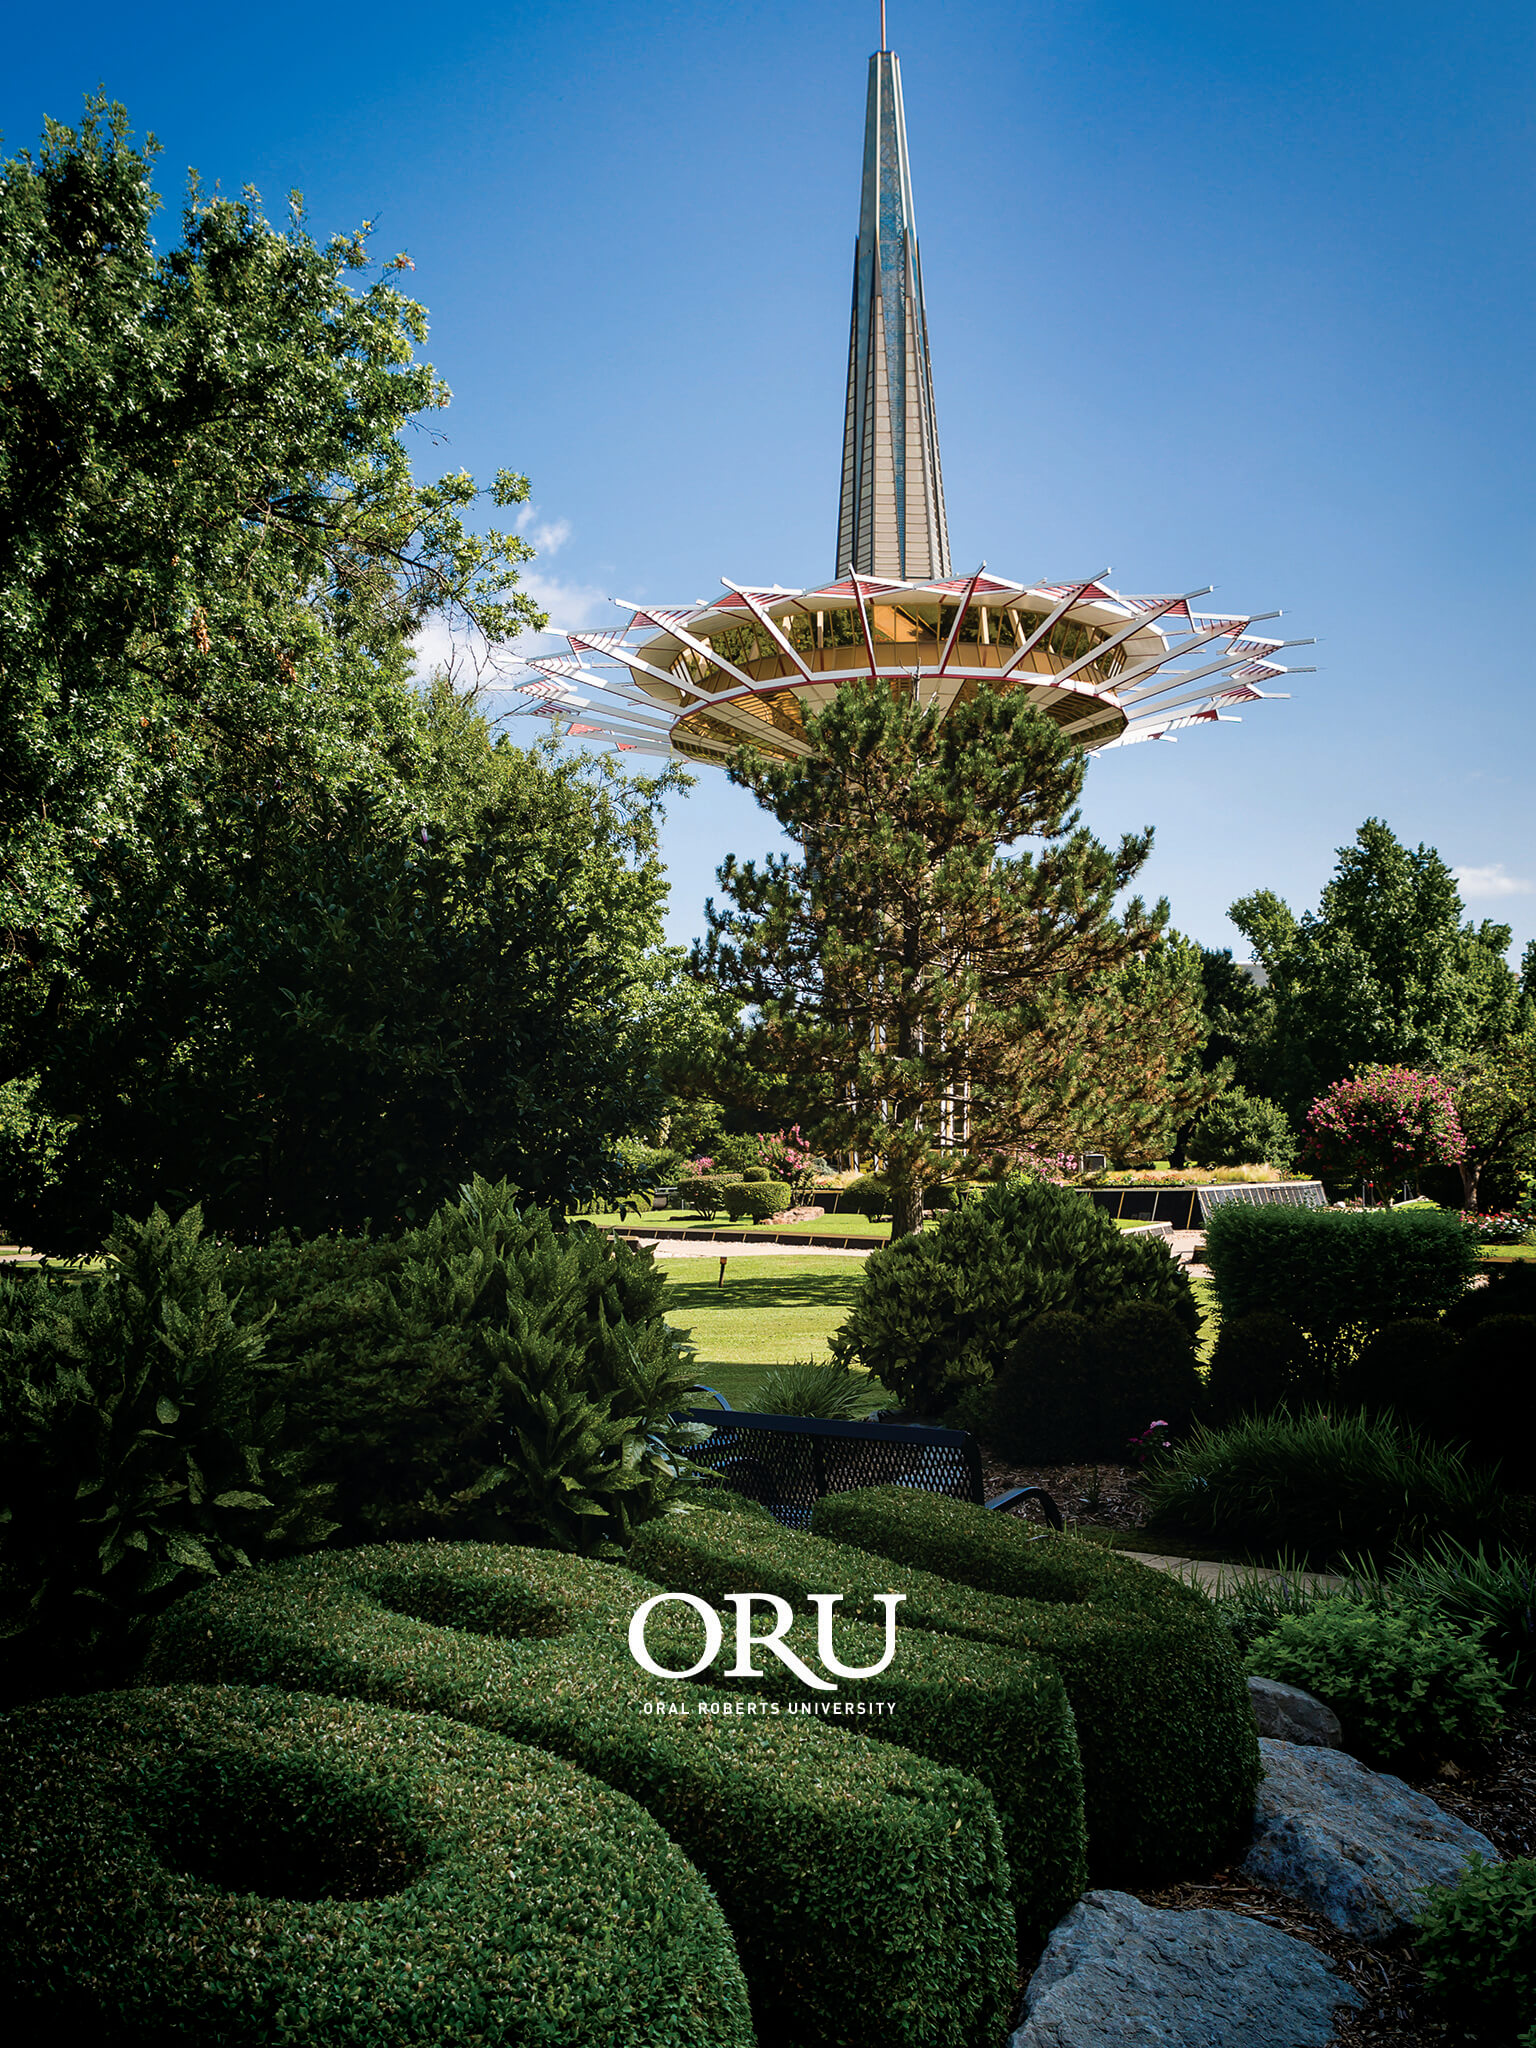 ORU Prayer Tower